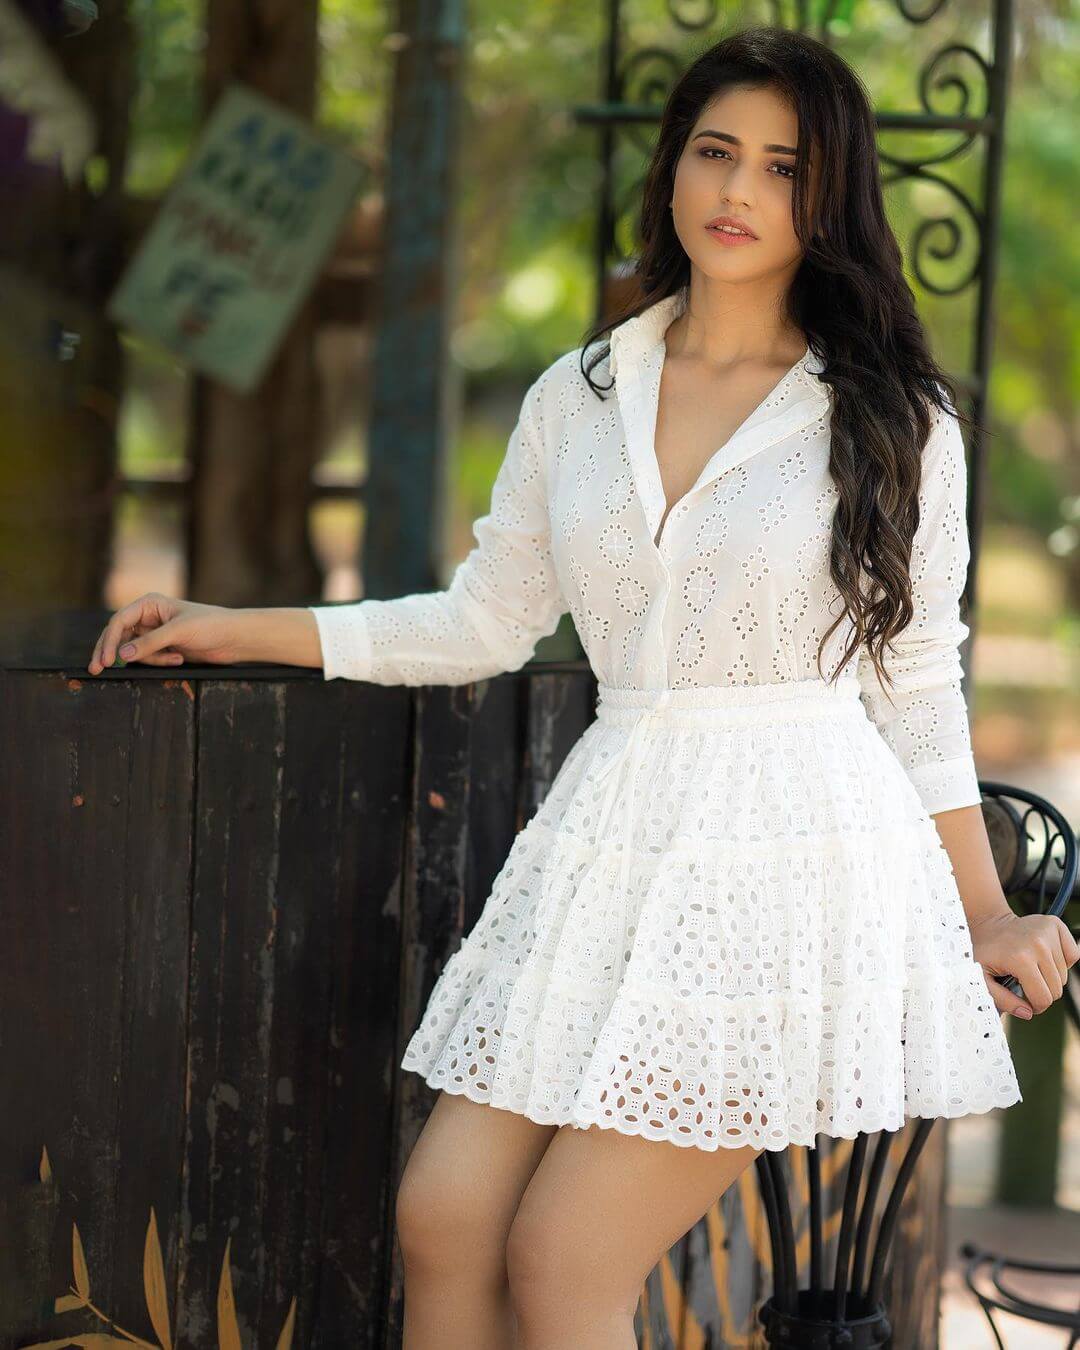 Priyanka Jawalkar Look Beautiful In White Collar Mini Dress Outfit Priyanka Jawalkar Stunning Outfit Looks